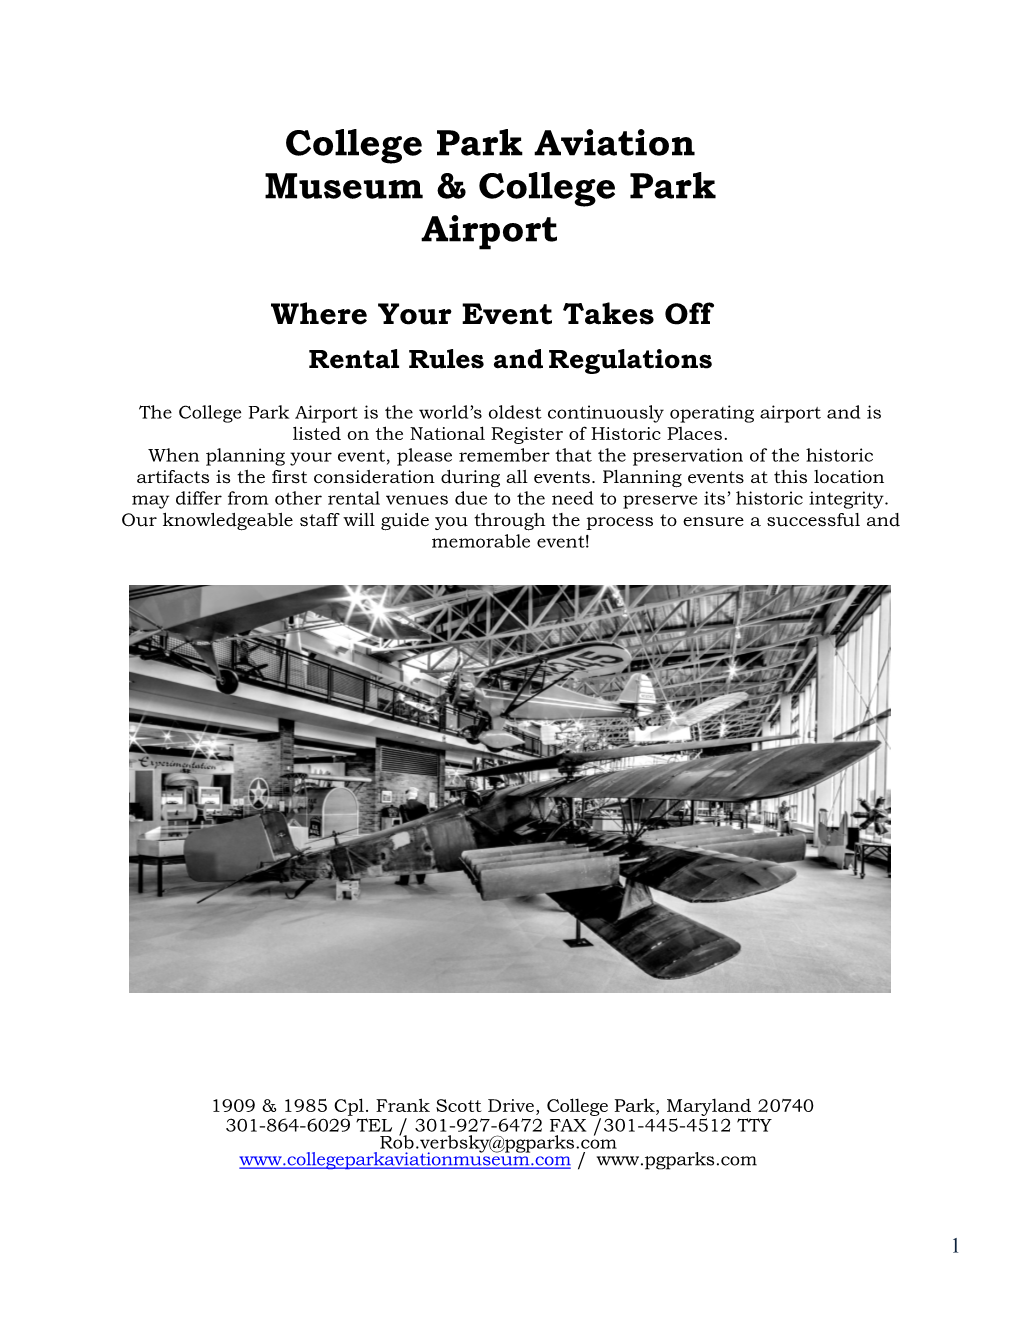 College Park Aviation Museum & College Park Airport